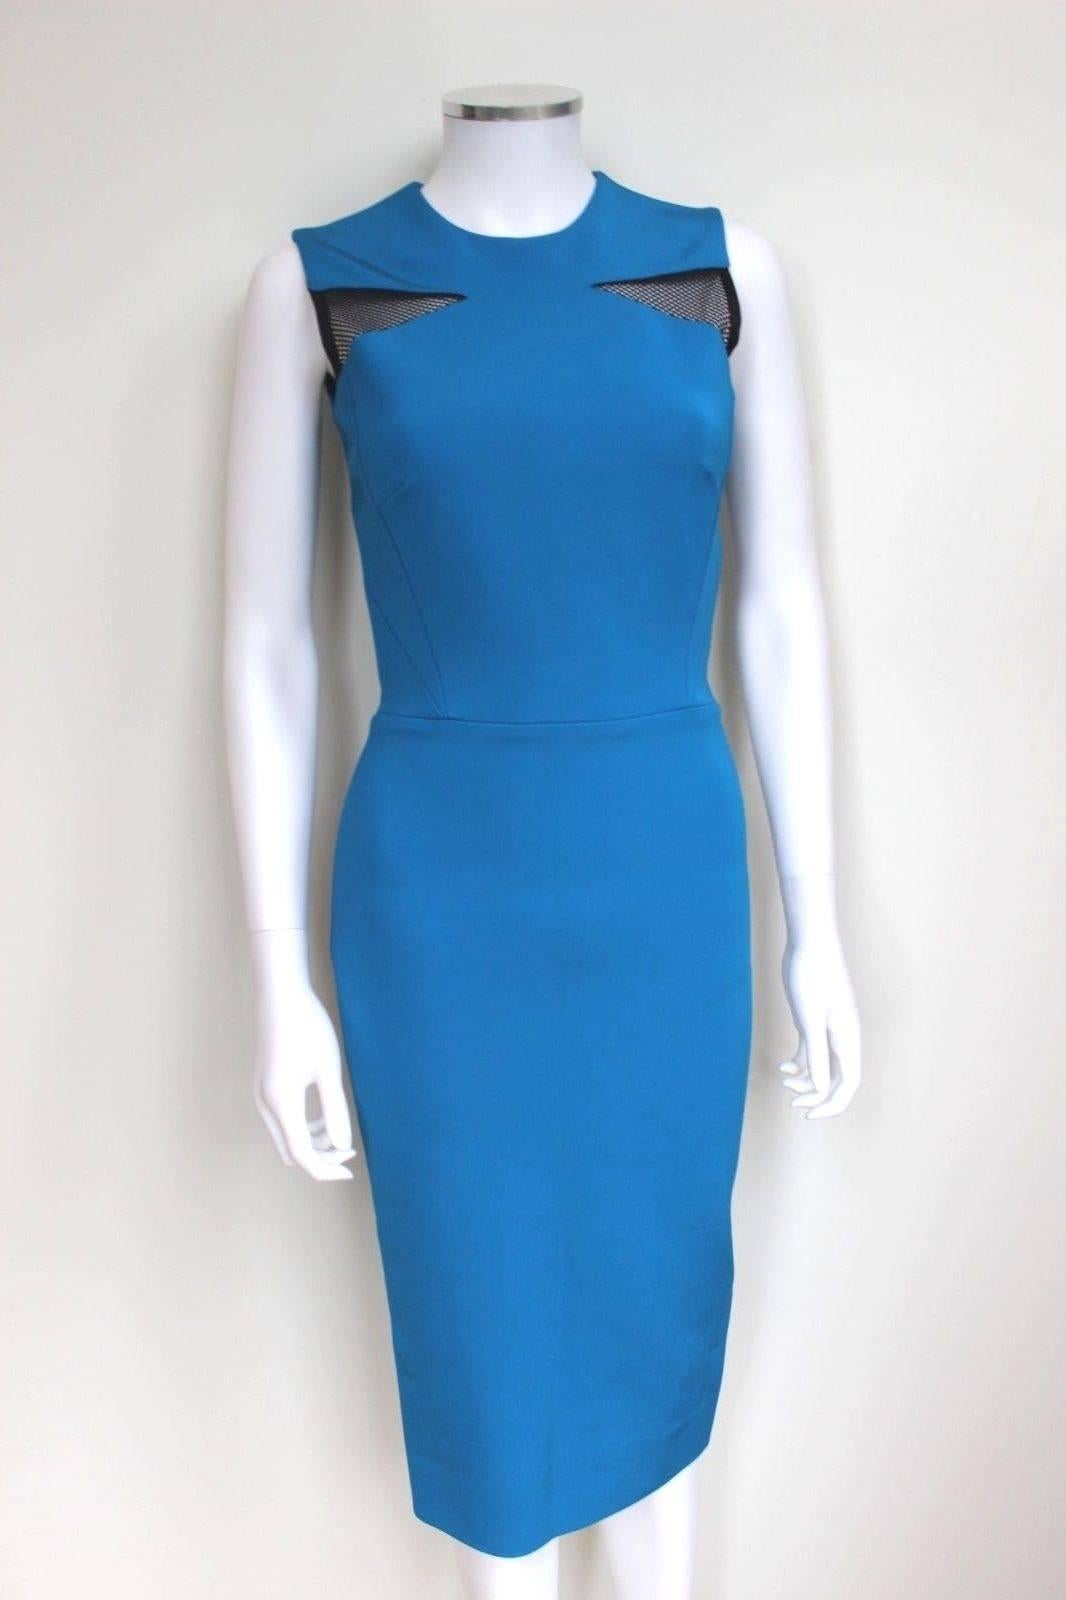 Victoria Beckham Blue Black Mesh-trimmed Ponte Dress UK 8
Black mesh panels, exposed zipper, partial lining. Two-way zip fastening through back. 
86% viscose, 10% polyester, 4% elastane; 
lining: 100% silk; trim: 77% polyester, 23% elastane.